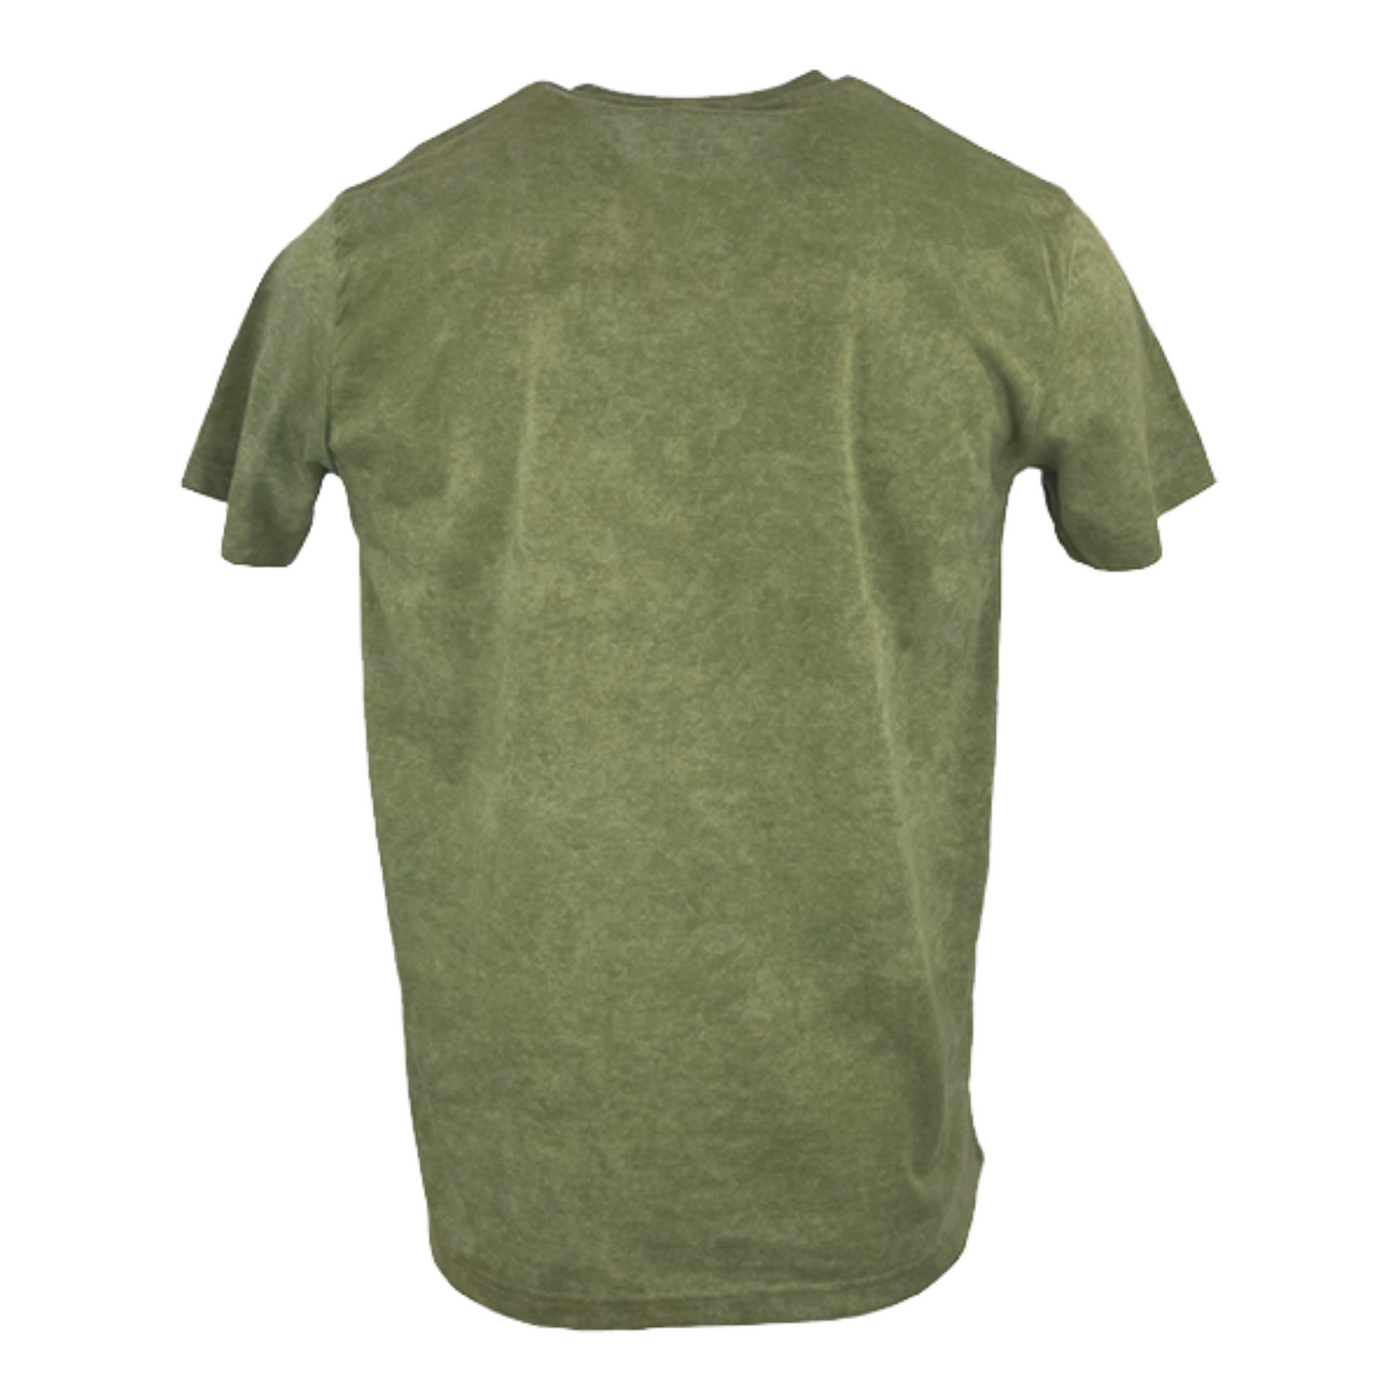 Musicians First Apparel Co. - Logo T-Shirt: Vintage Green